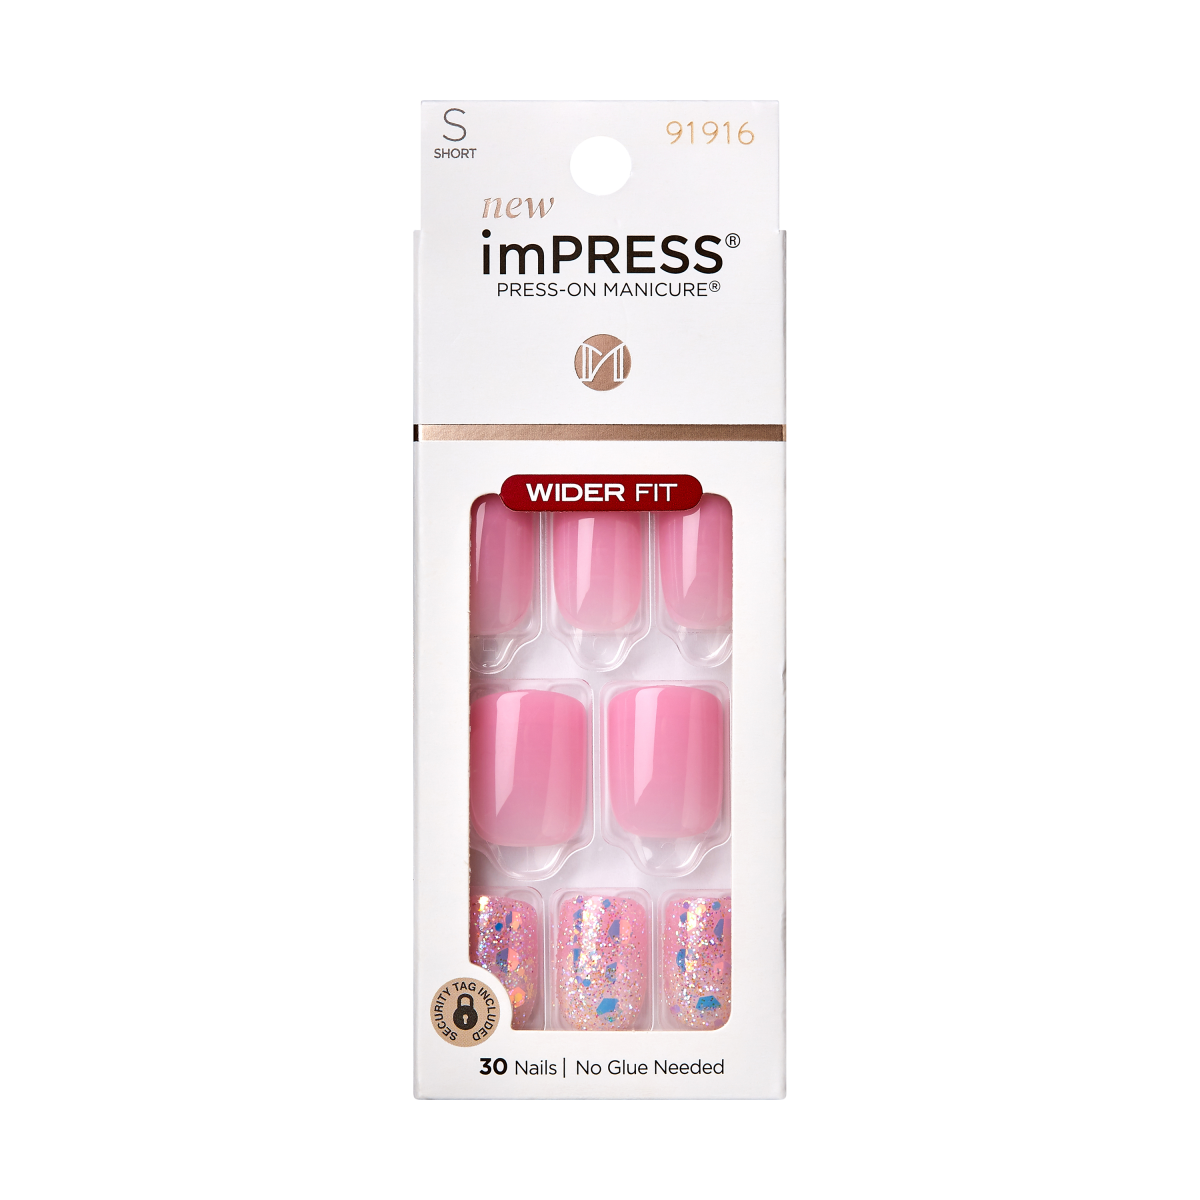 imPRESS Press-On Manicure - Wide Fit - Dream It Up